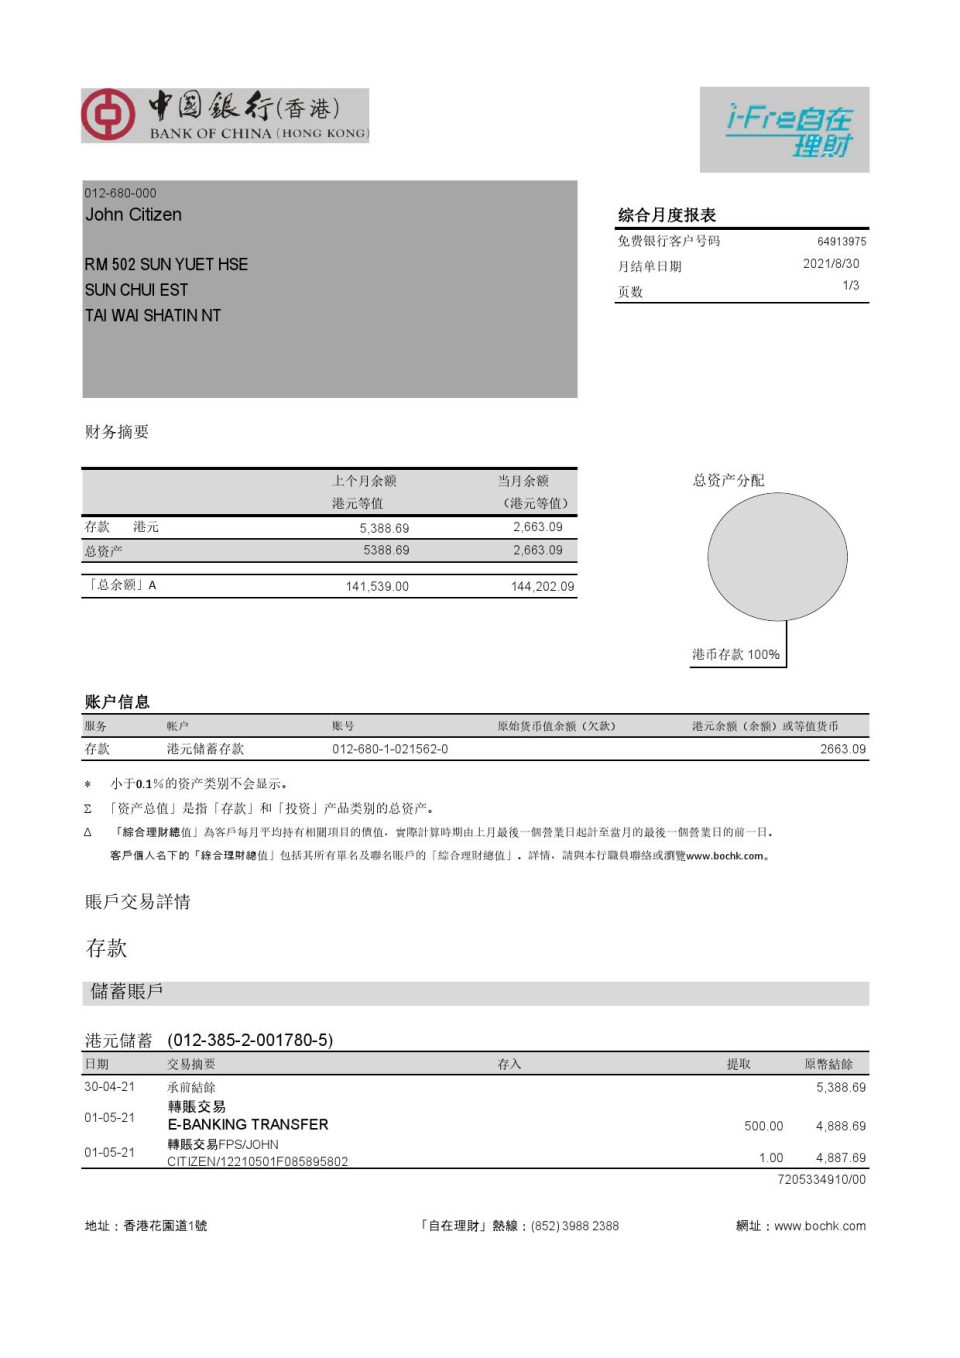 Hong Kong Bank of China (Hong Kong) bank statement template in Excel and PDF format (3 pages)